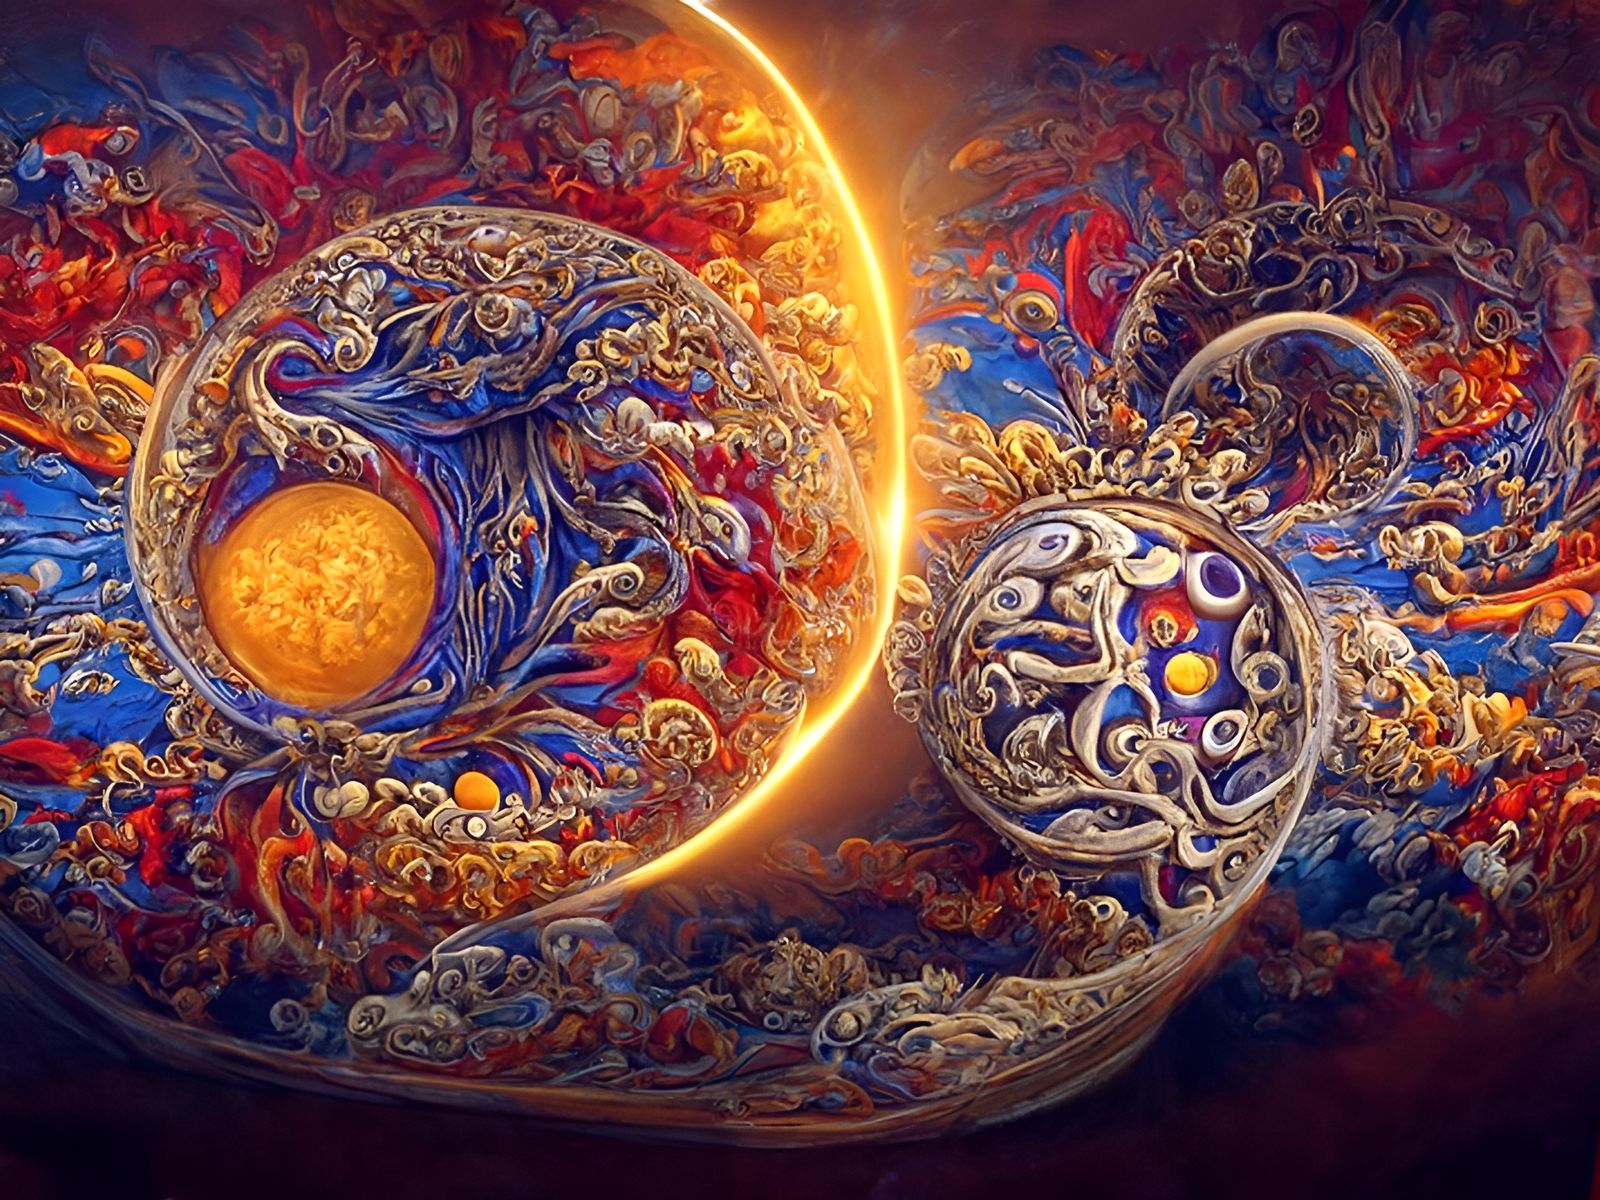 sun and moon art